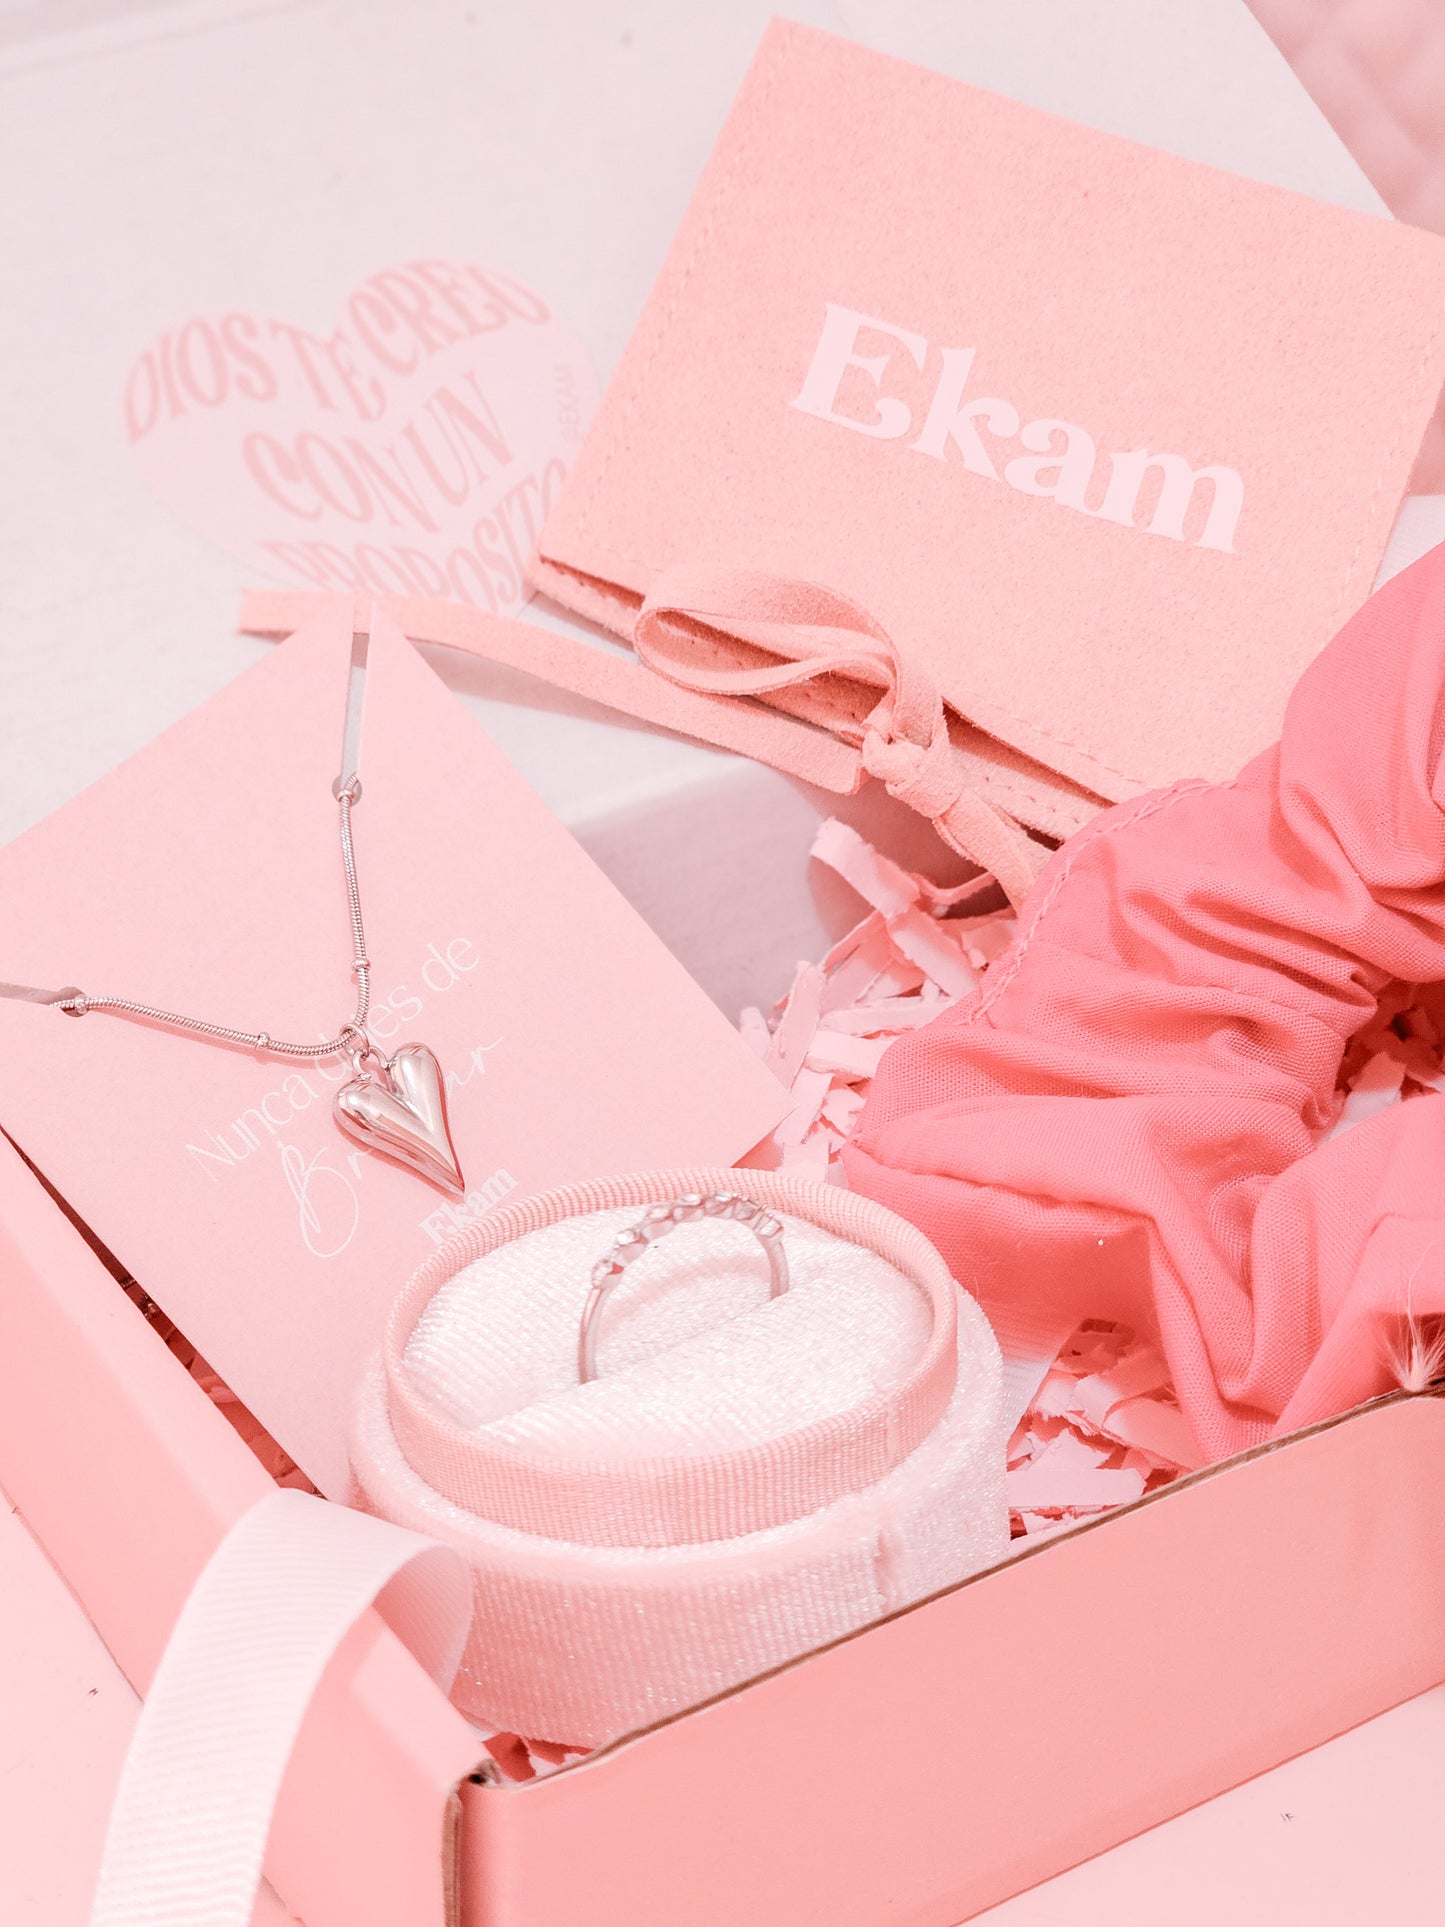 Pink Box Ekam Jeweler's - February